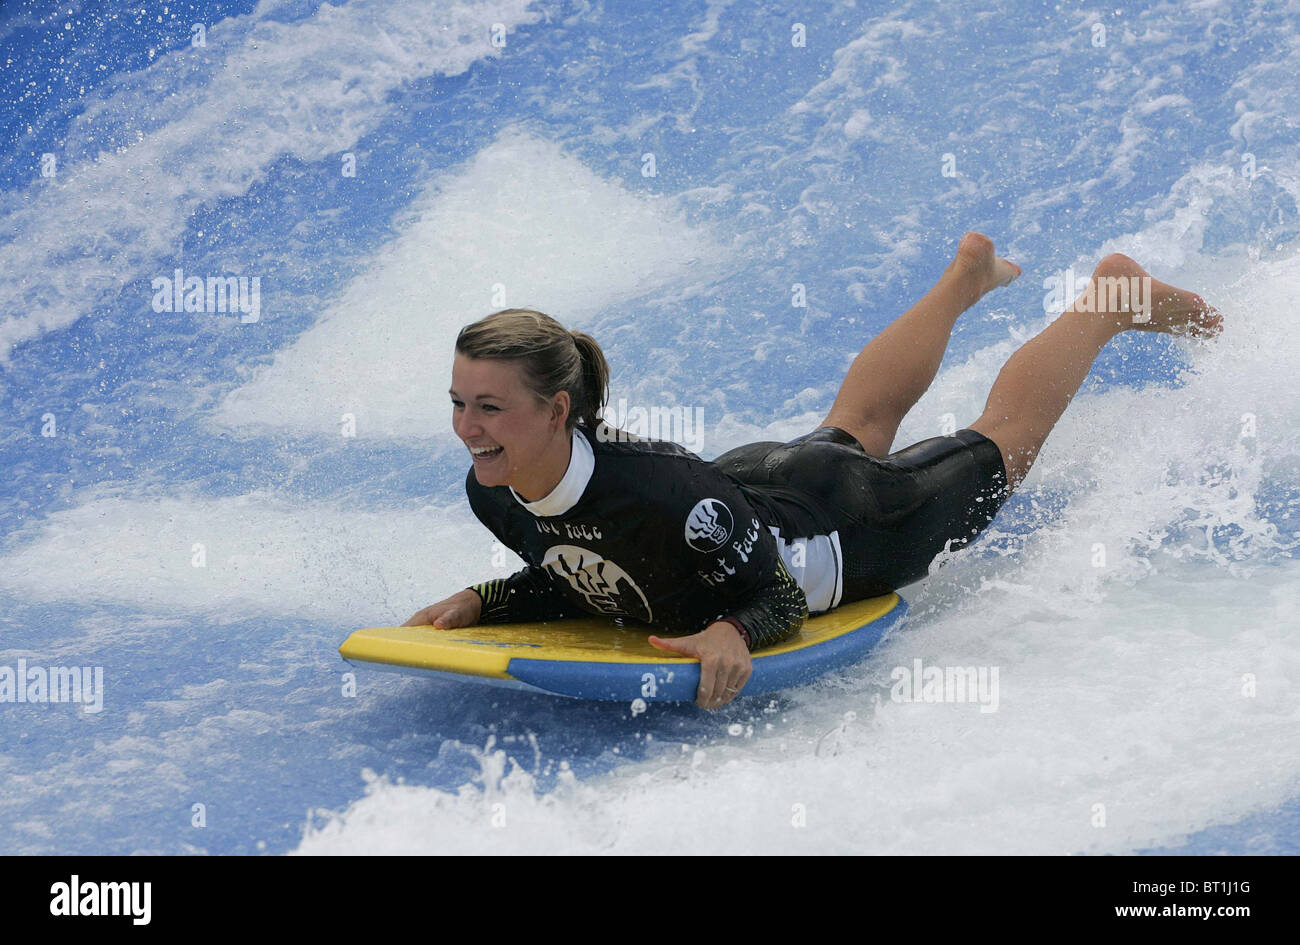 Pro surfer Emma Skinner. Picture by James Boardman. Stock Photo